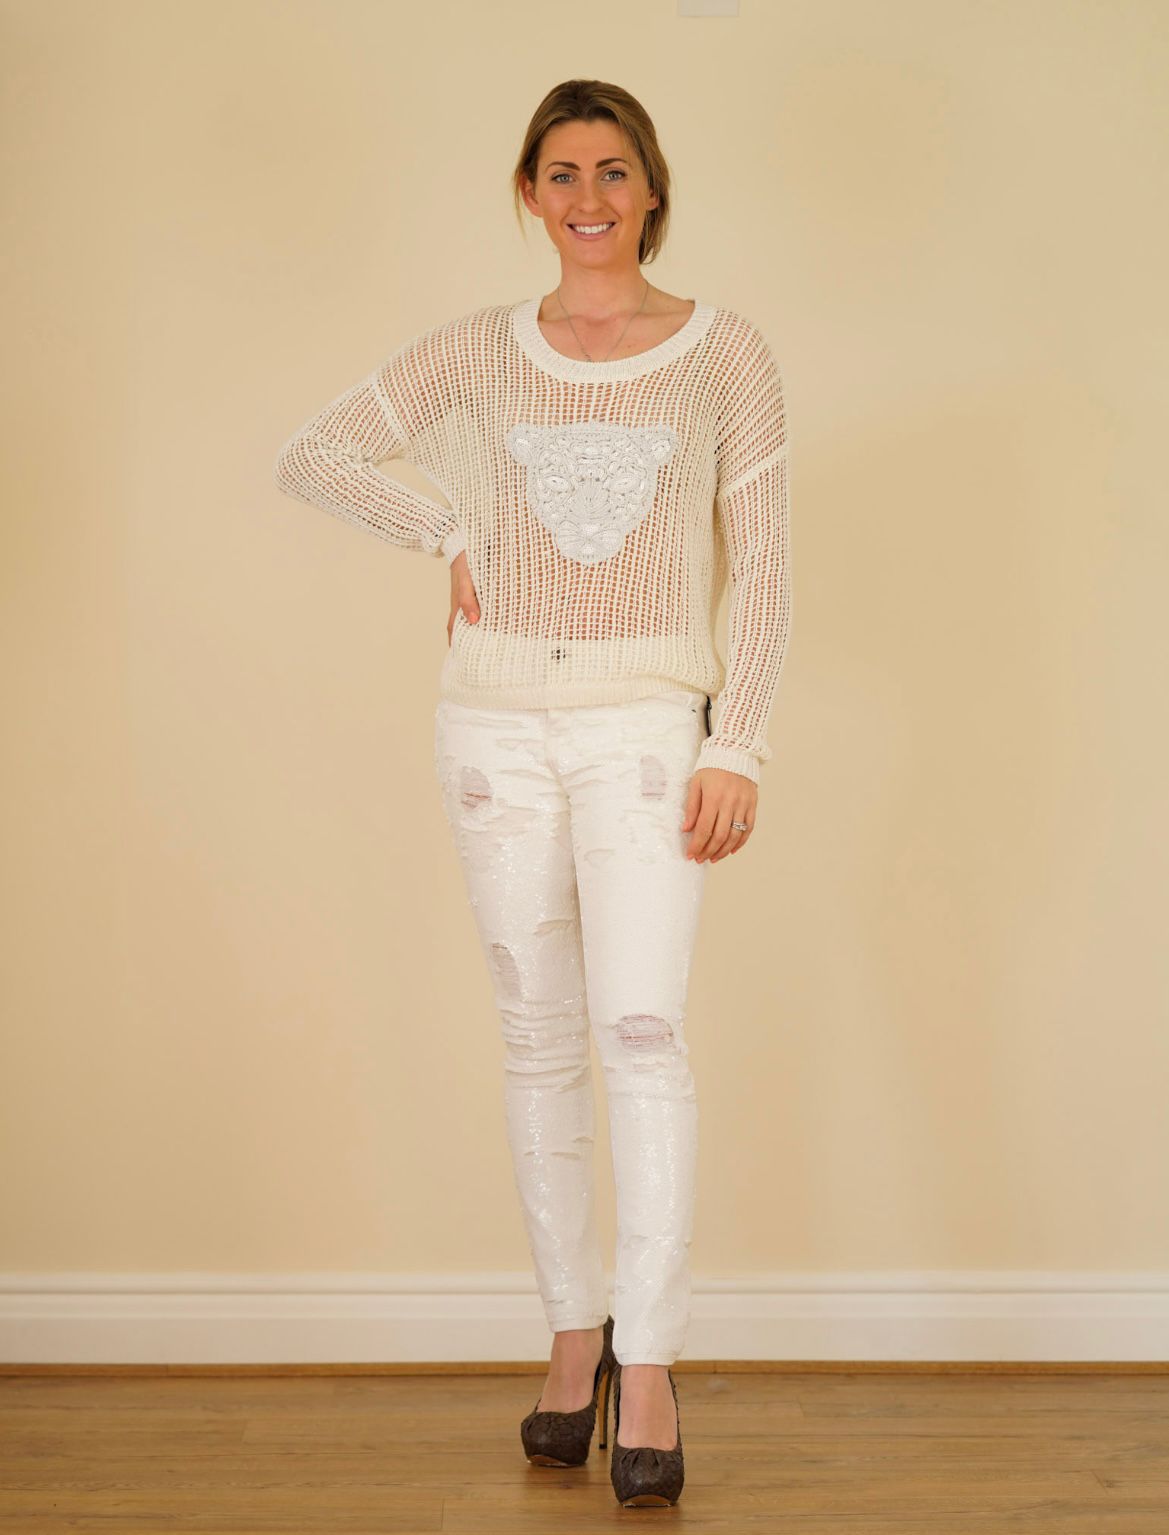 Silvian Heach knit jumper XXS